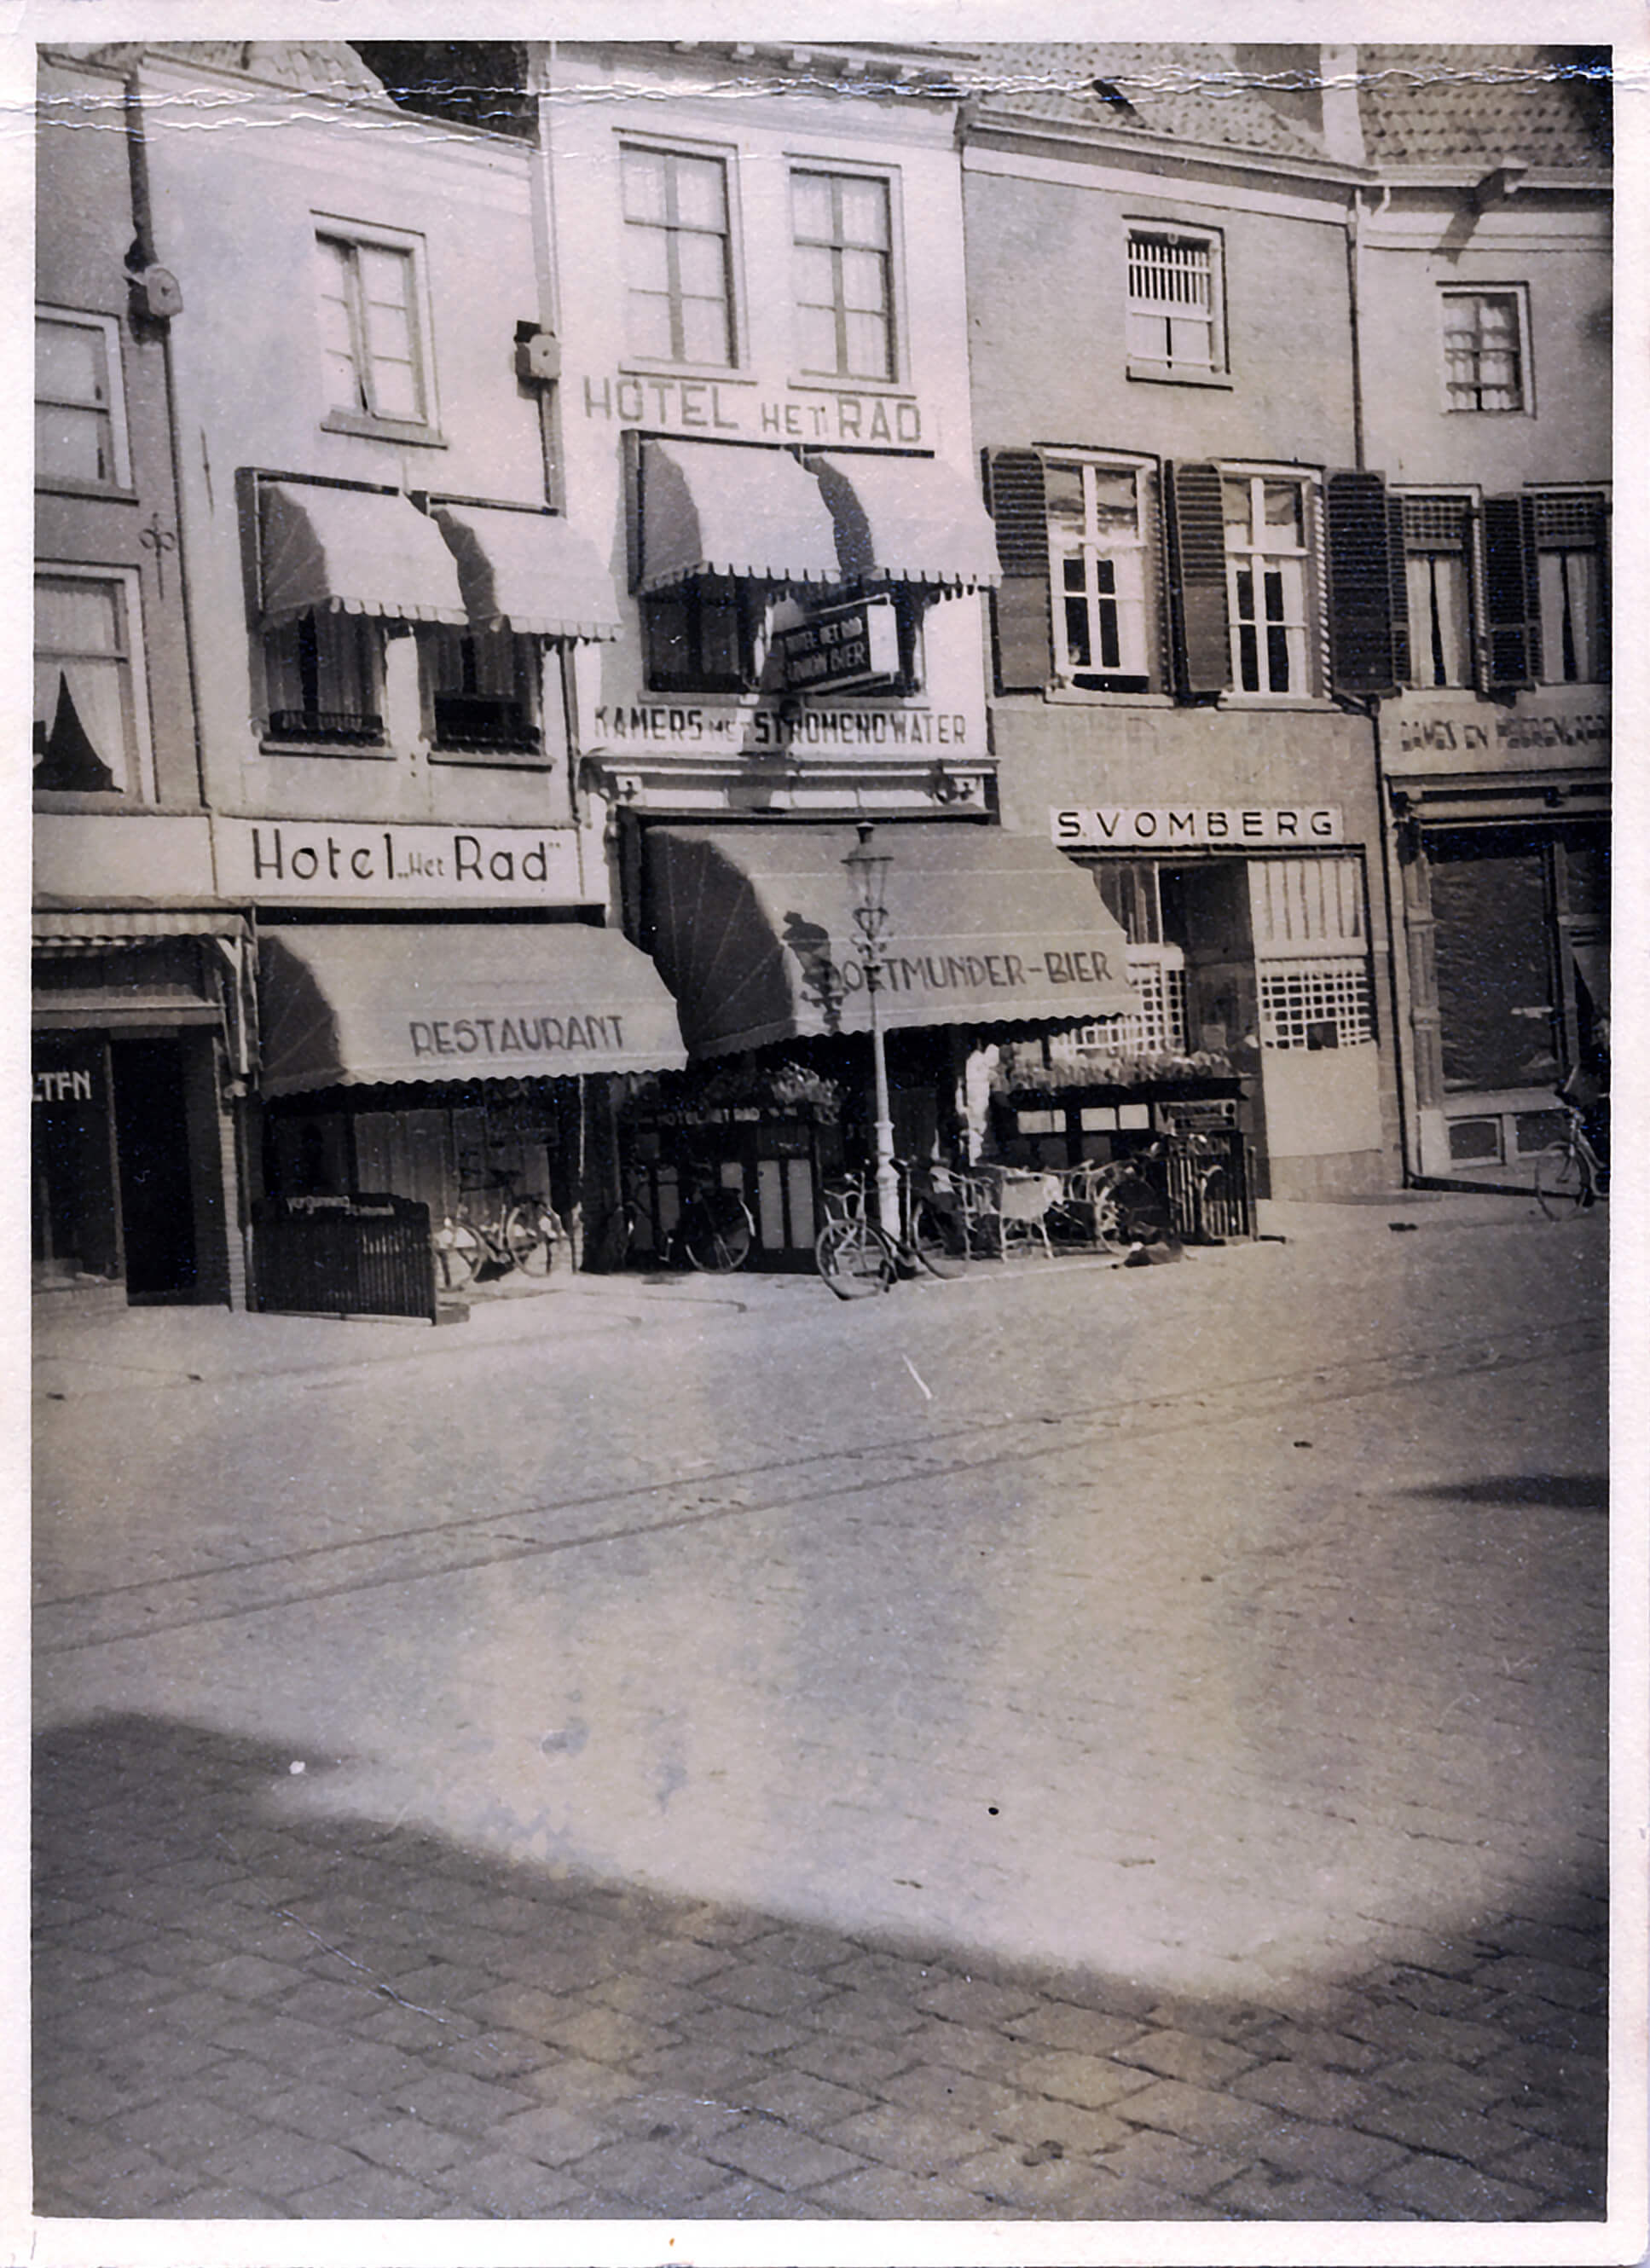 SZU002030548 Foto Hotel Het Rad, ca. 1942